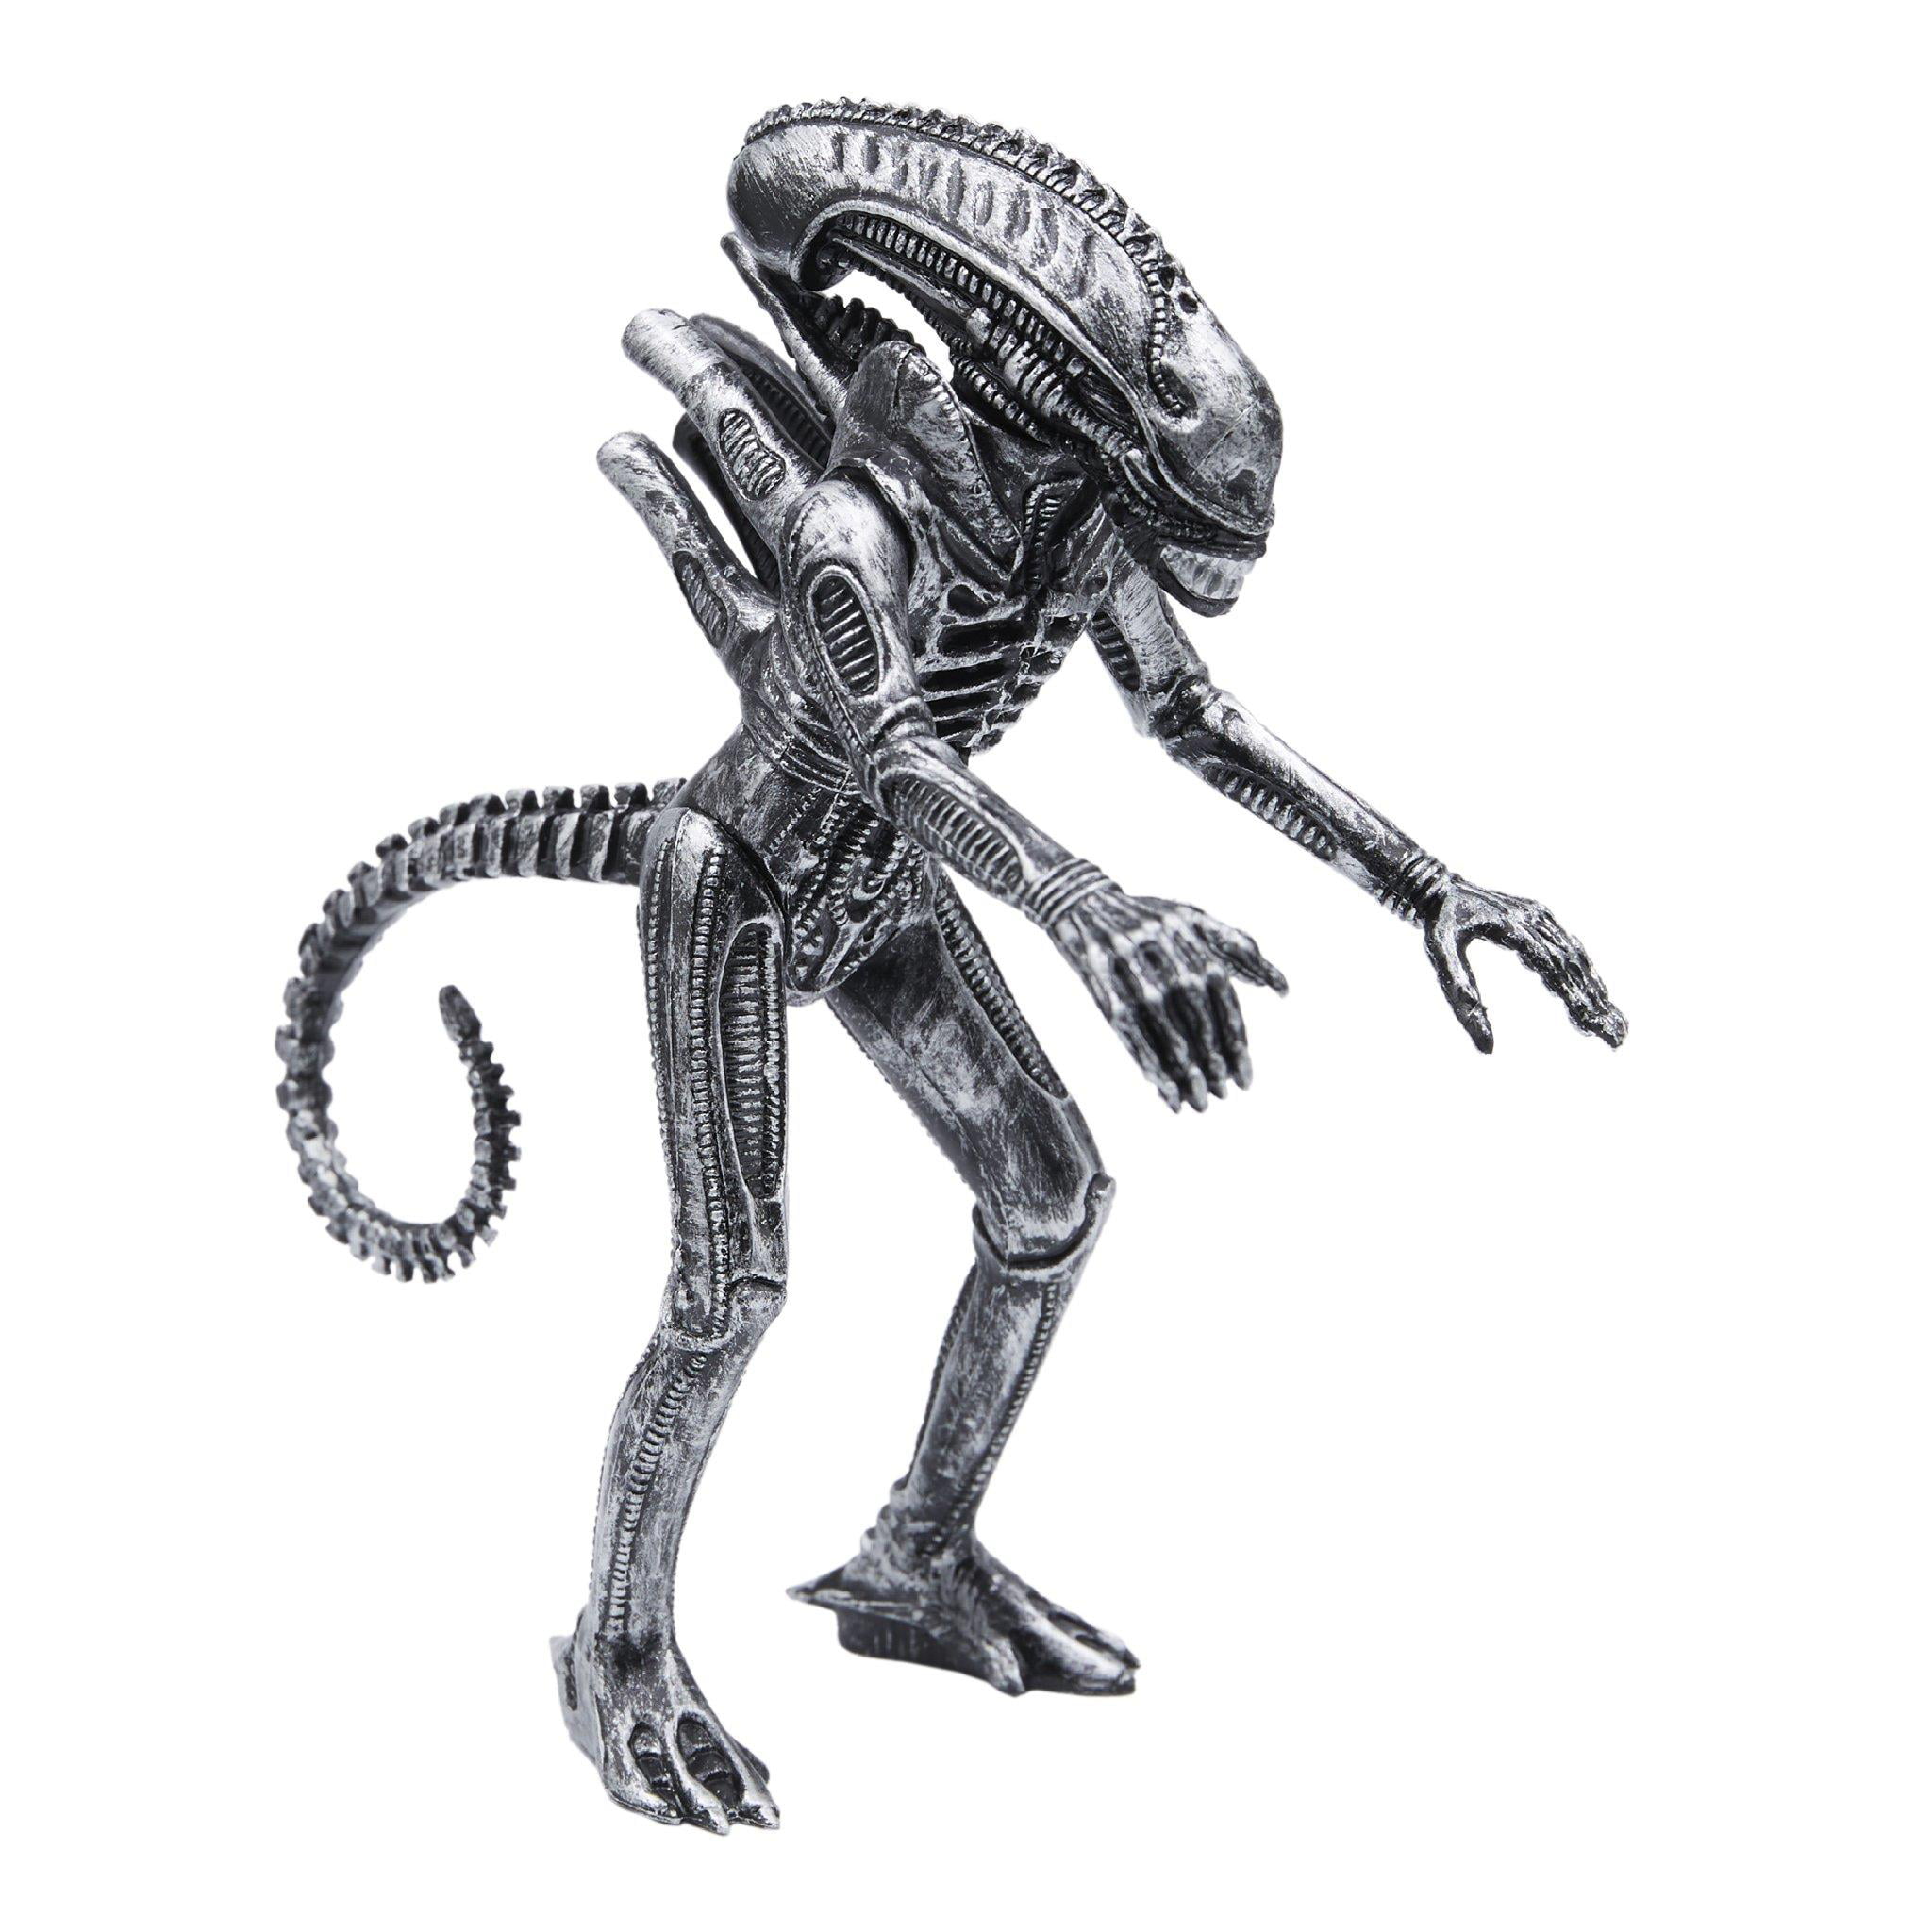 New Super 7 Aliens Xenomorph The Alien warrior Stealth 4" ReAction Figure 2020 